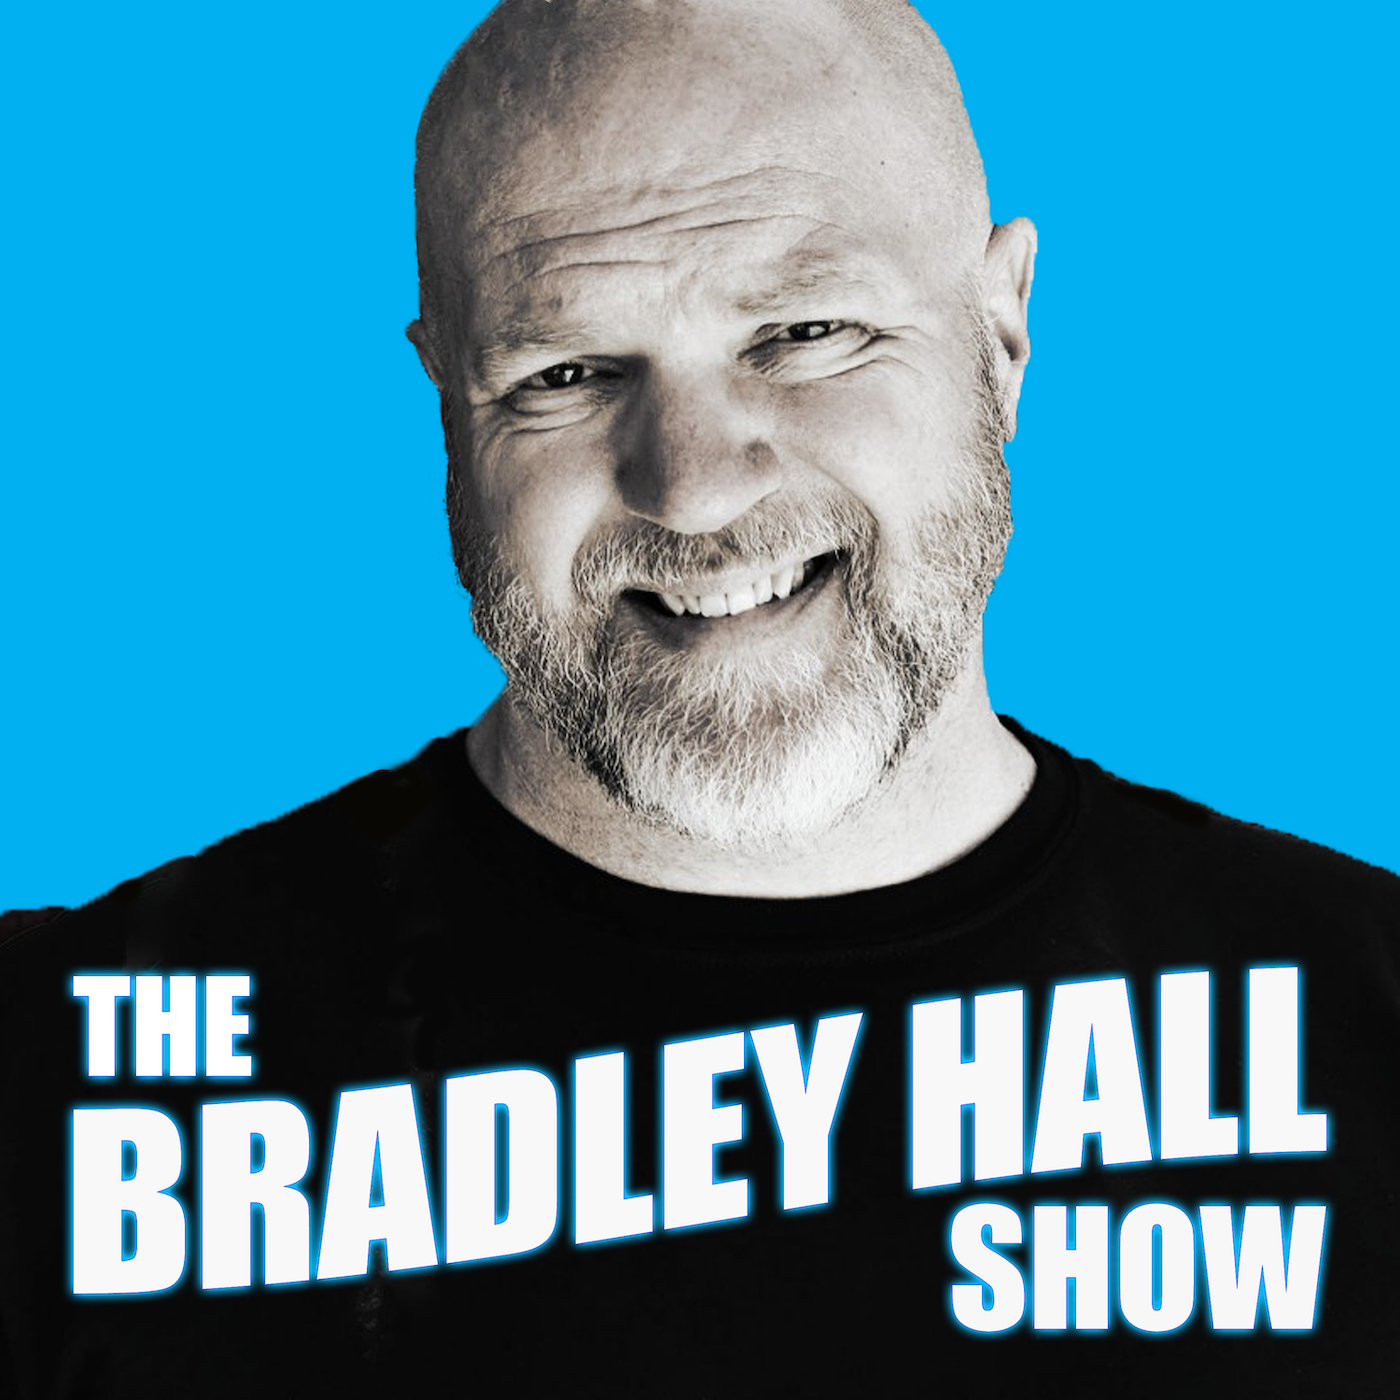 The Bradley Hall Show